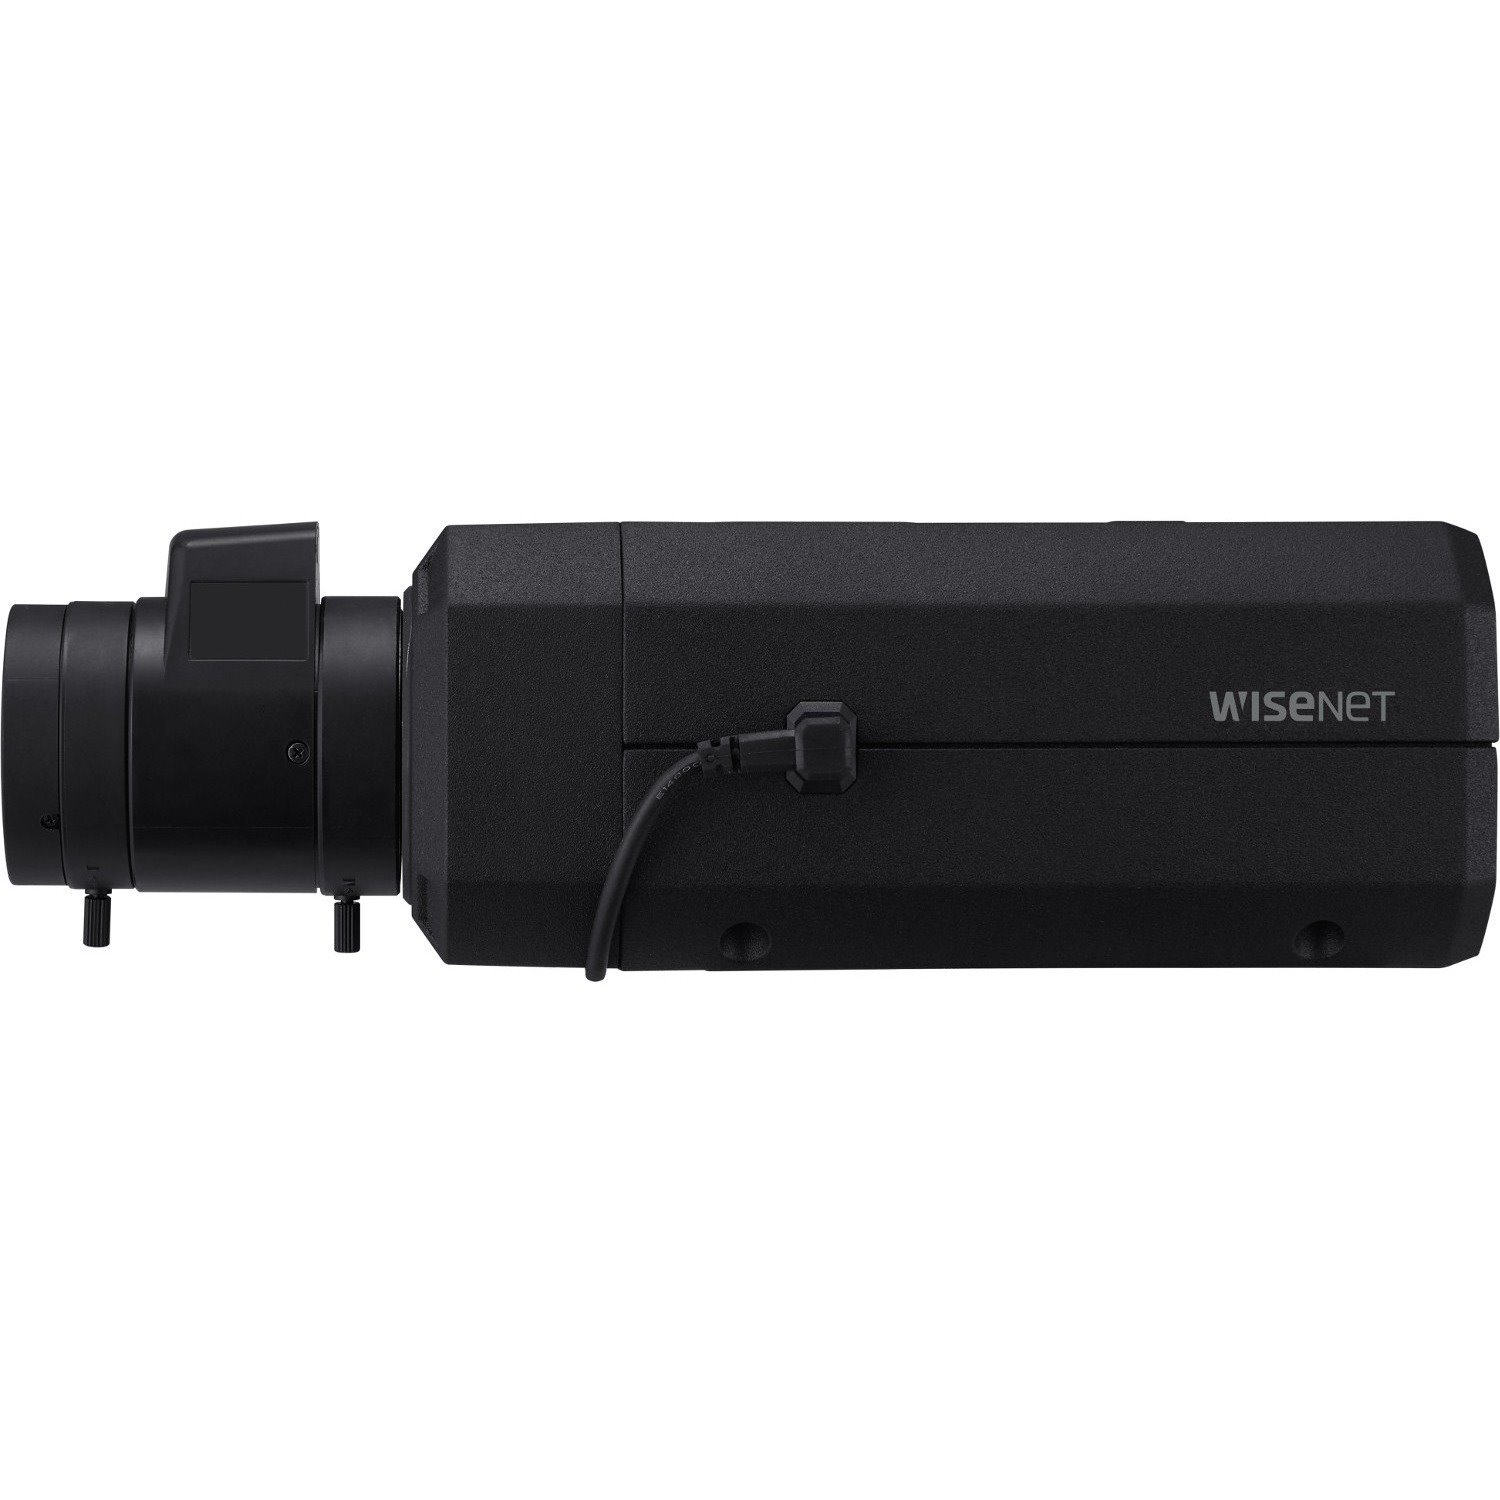 Wisenet XNB-8003 6 Megapixel Network Camera - Color - Box - Black